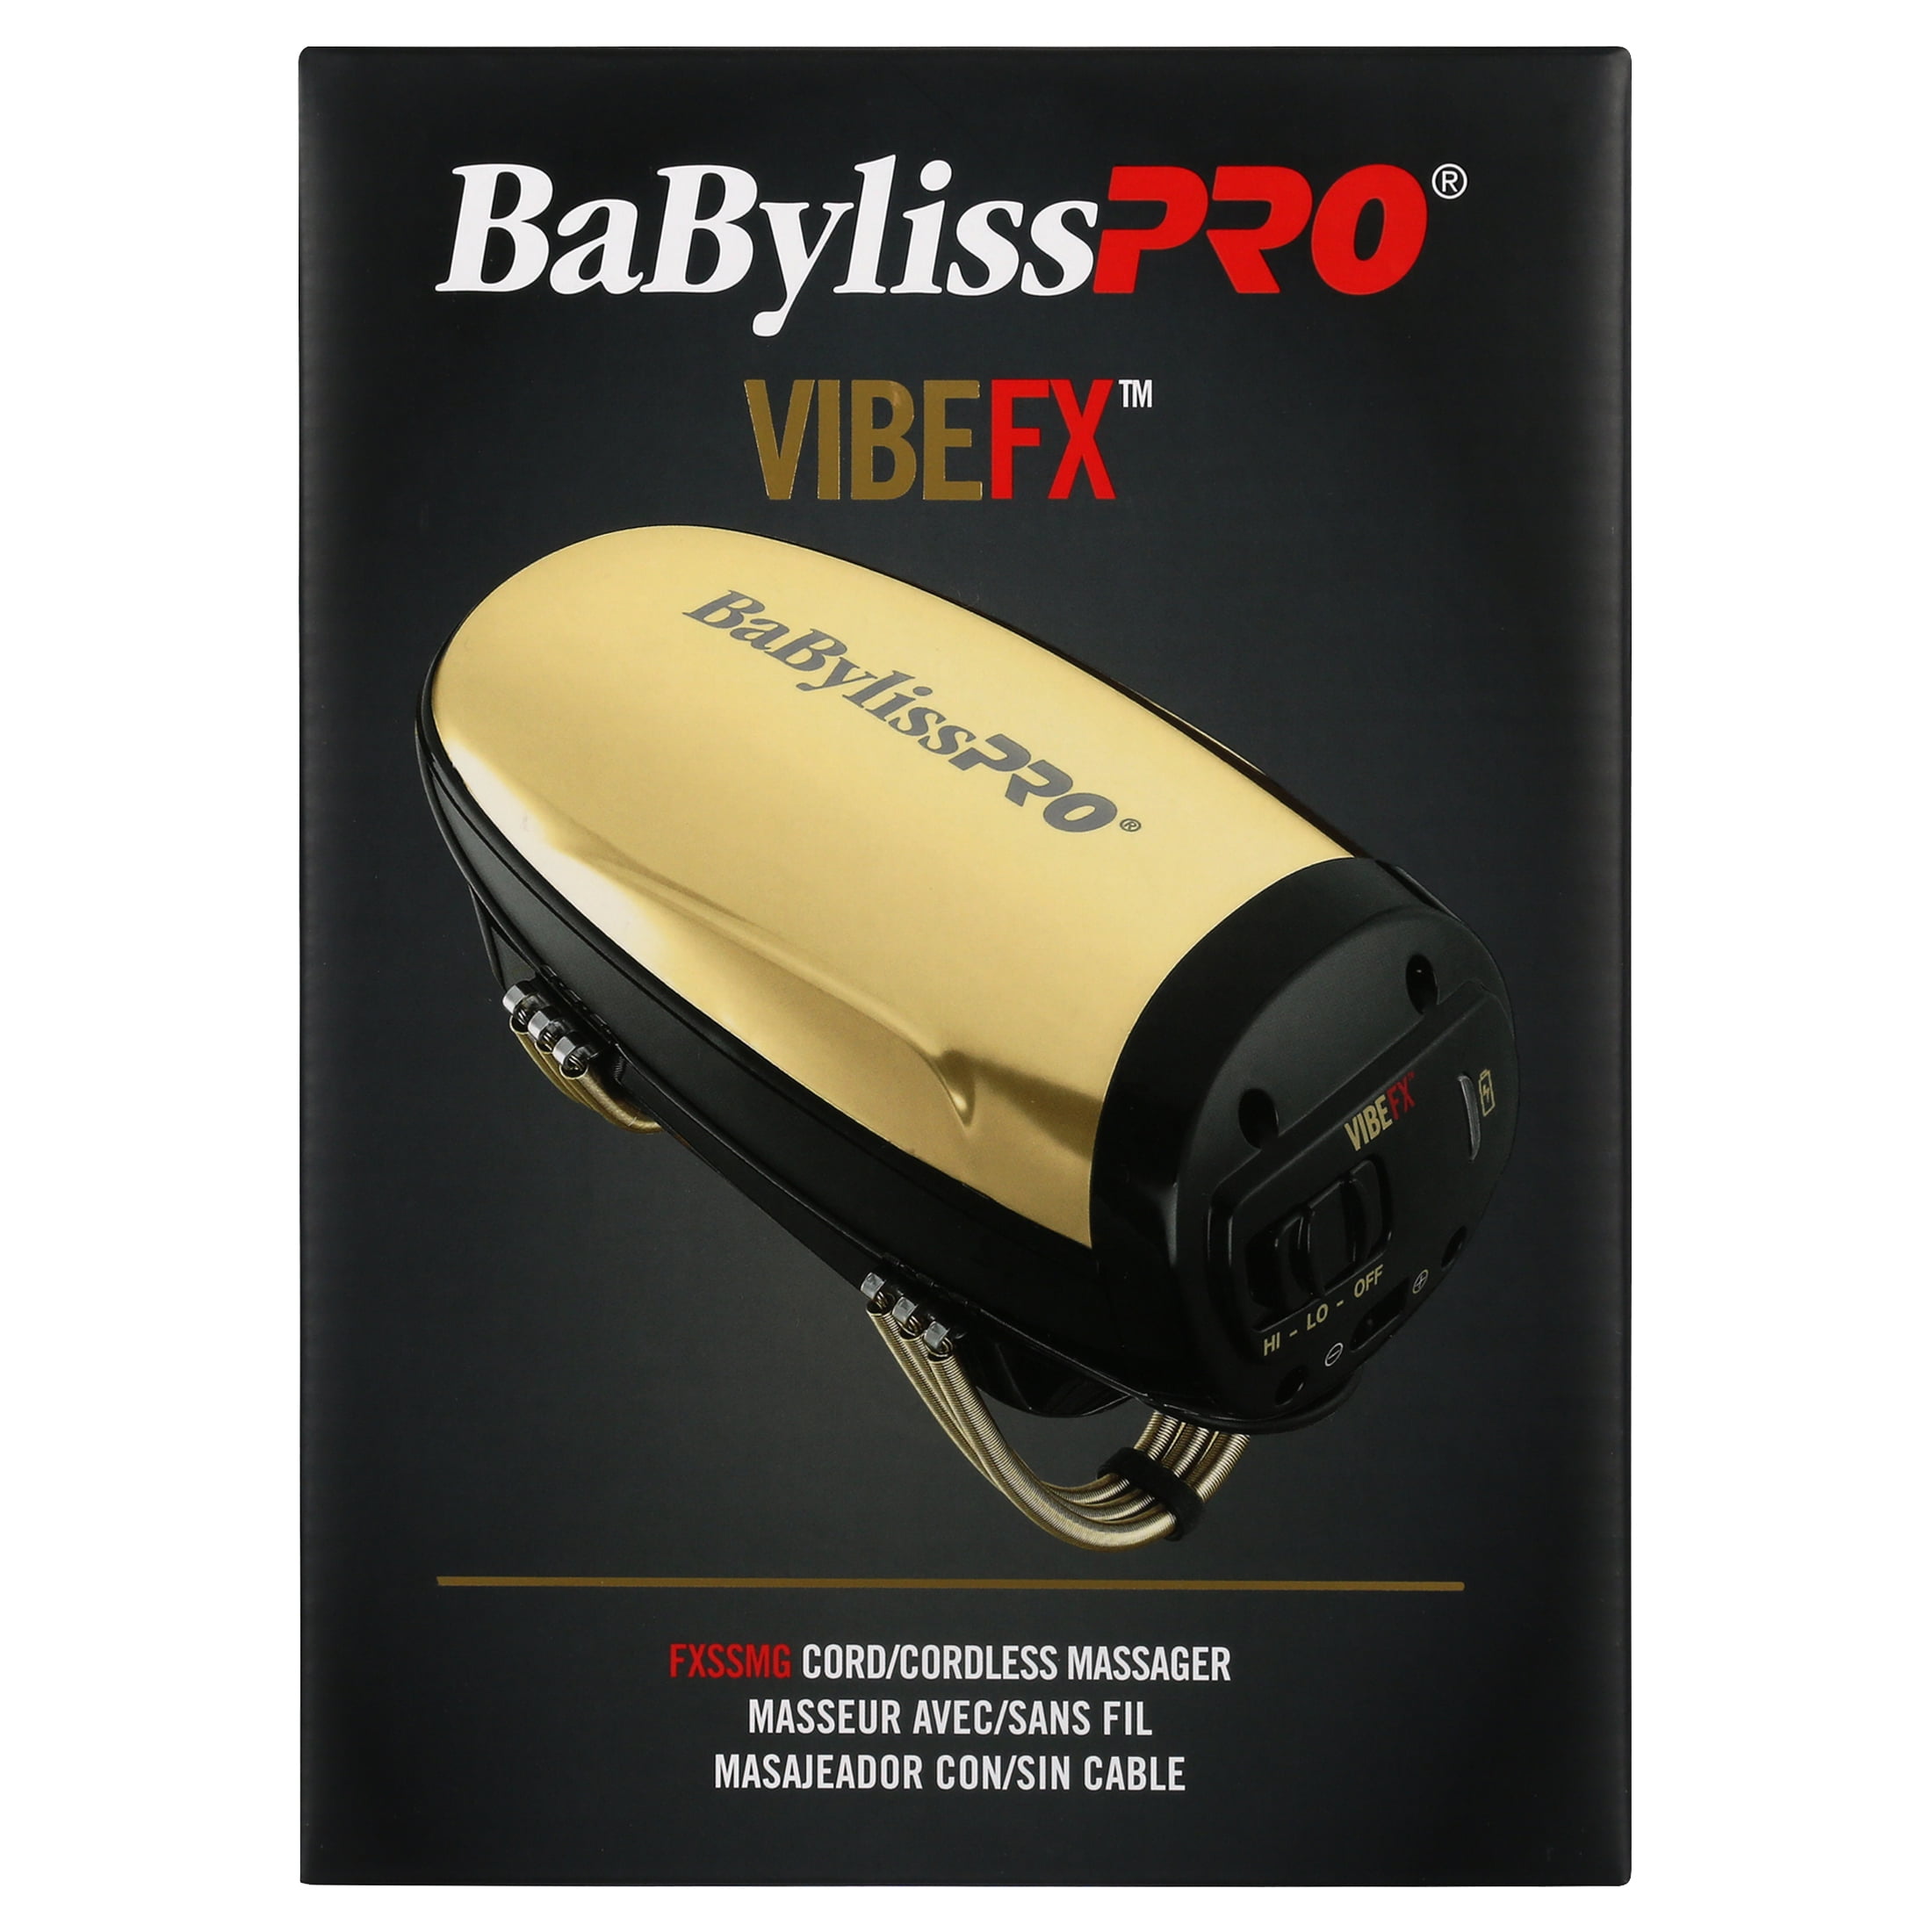 Babyliss Pro Vibe Fx Cord / Cordless Massager Fxssmg Gold, 1 - Kroger